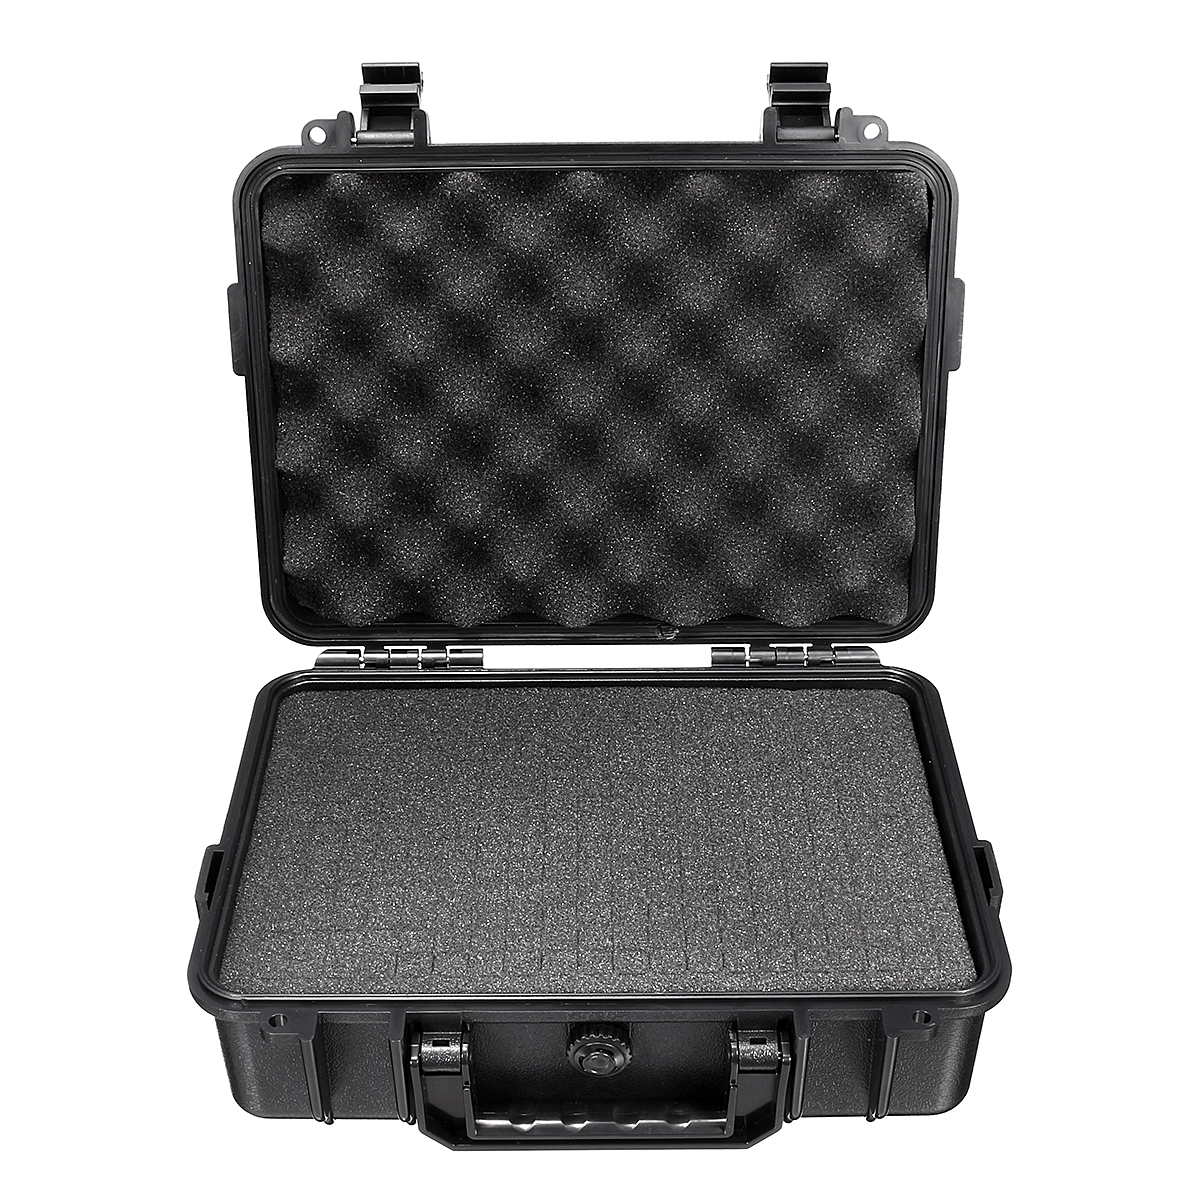 Waterproof-Hard-Carry-Tool-Case-Bag-Storage-Box-Camera-Photography-Sponge-Storage-Kit-1861191-1